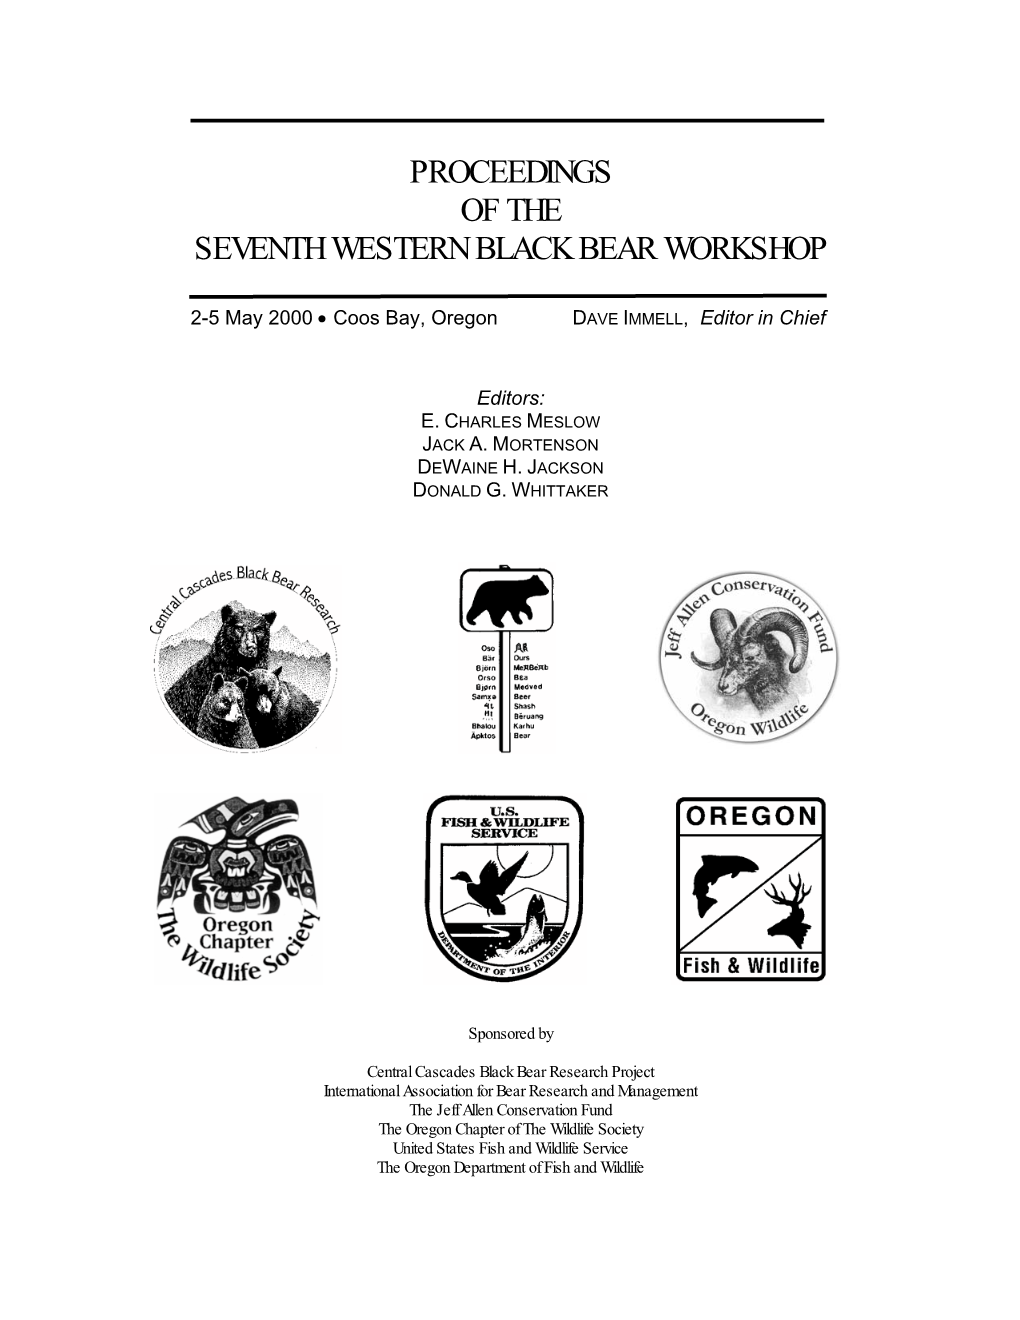 Proceedings of the Seventh Western Black Bear Workshop